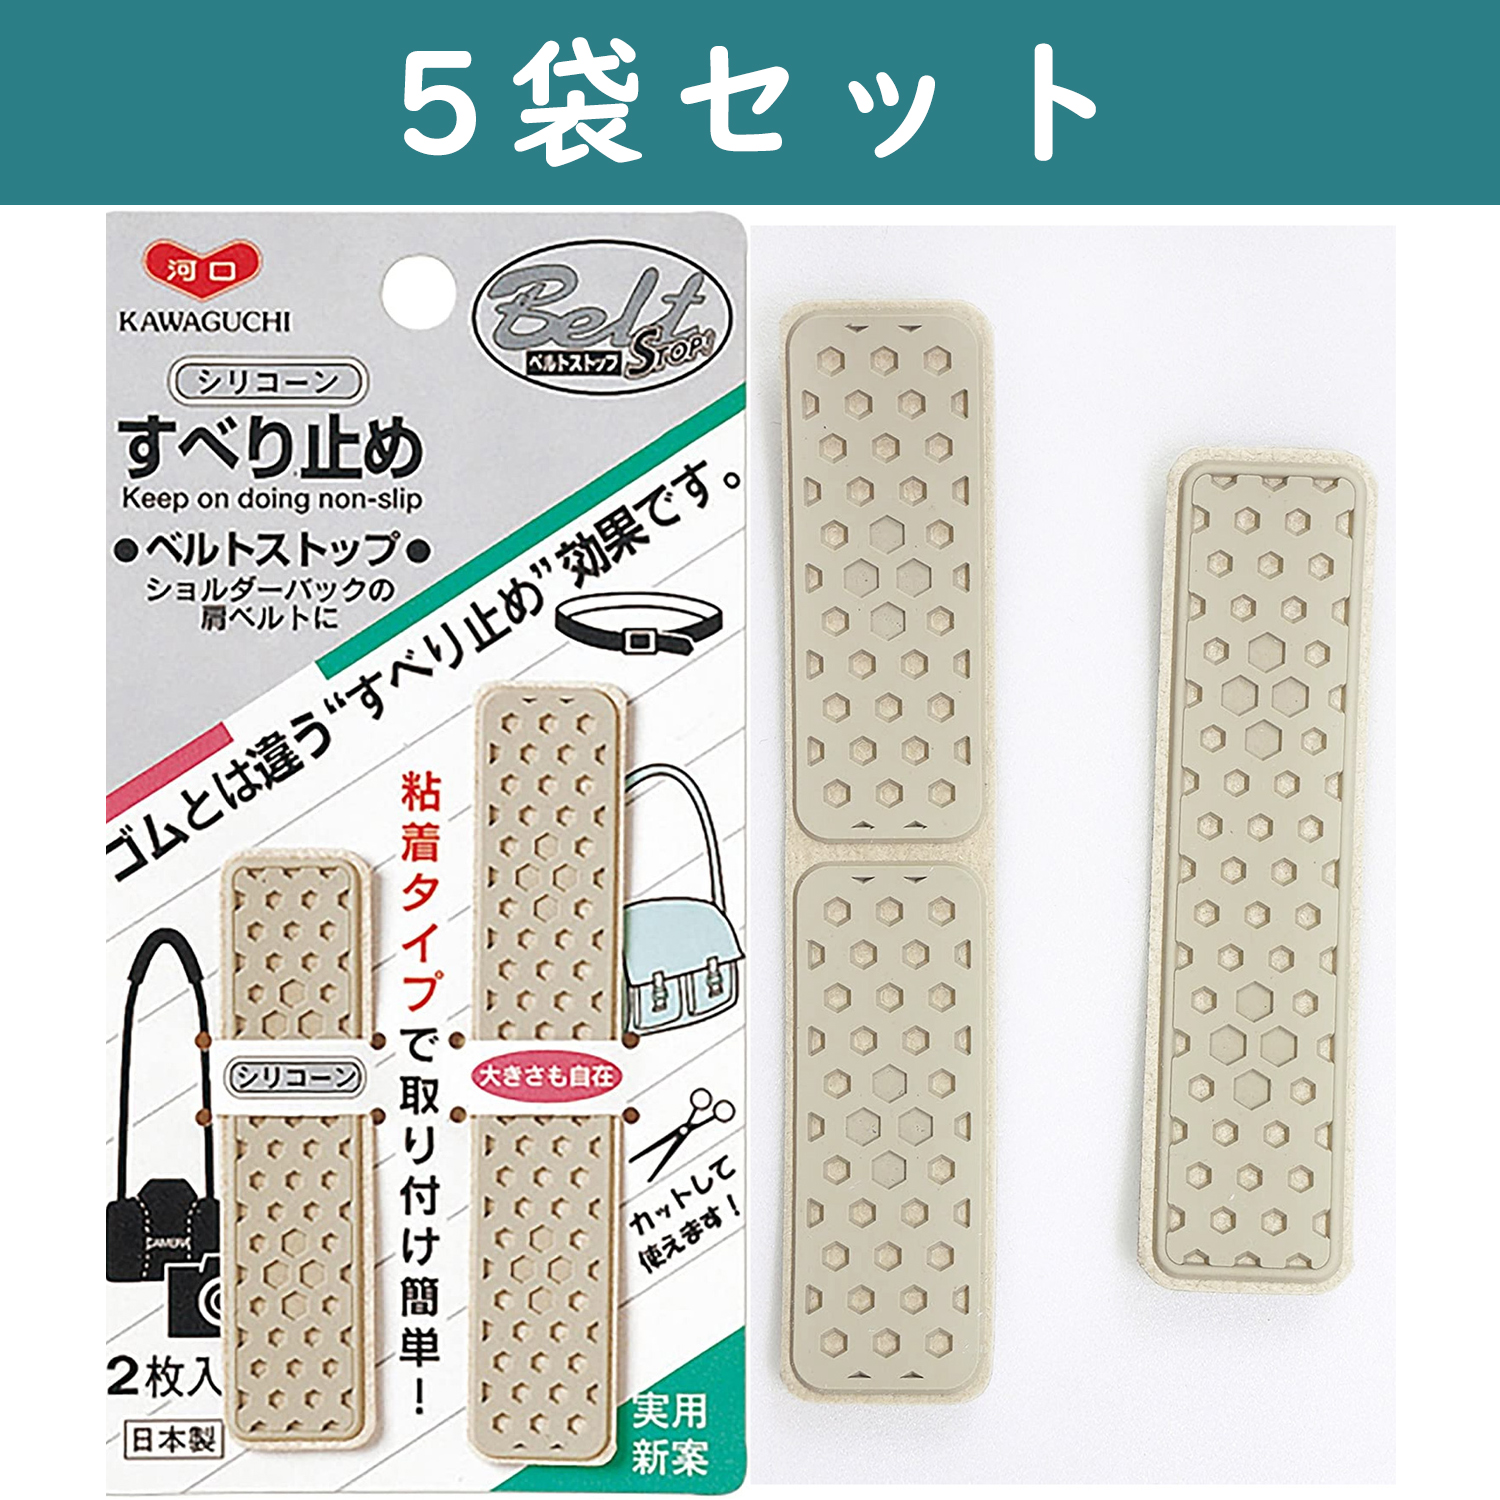 TK80025-5 KAWAGUCHI Belt Stop Silicone Anti-Slip Adhesive Type 2 pcs x 5 Bags Set Beige (Set)